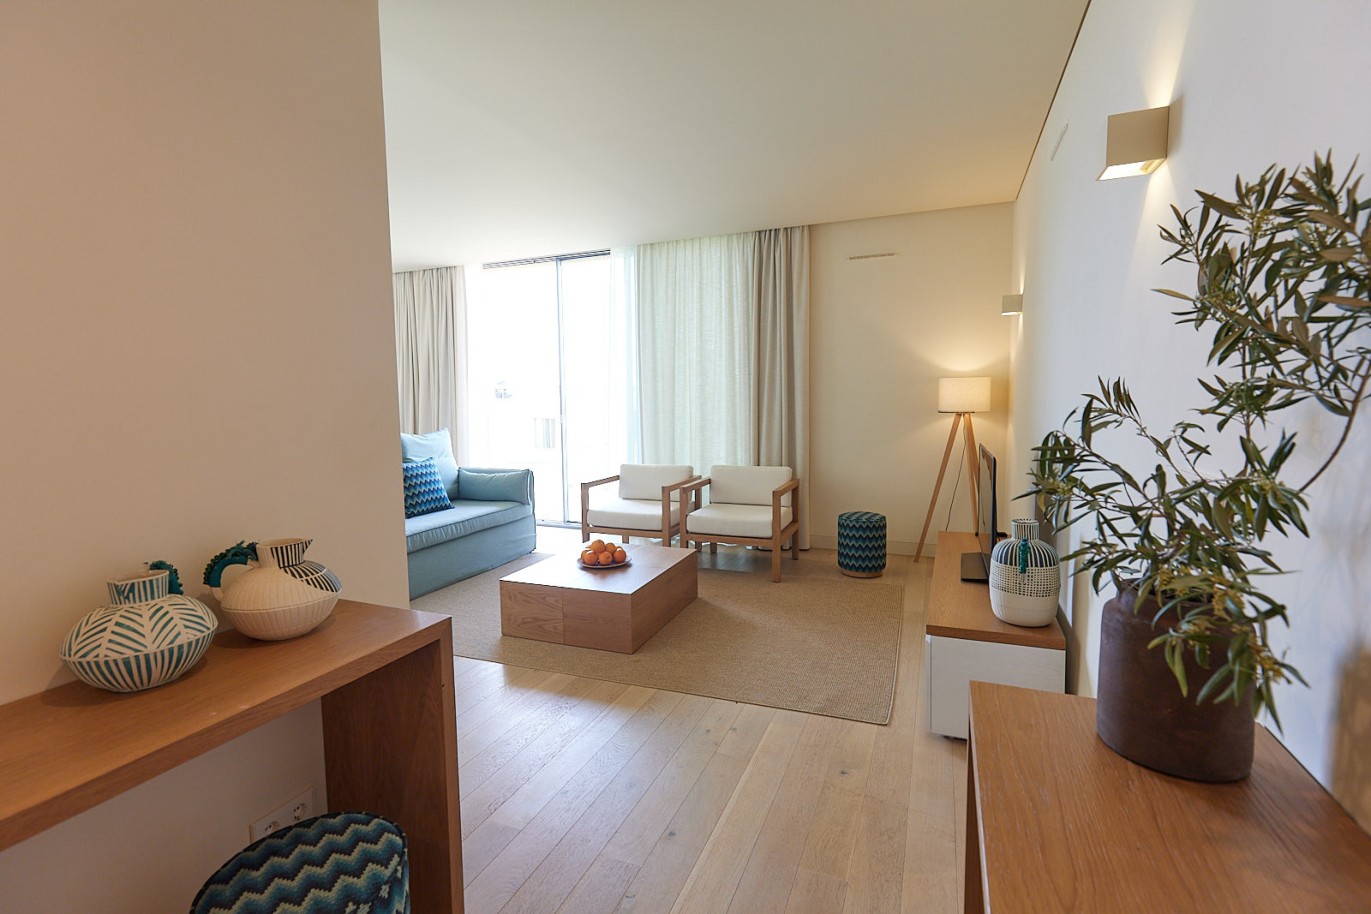 2 bedroom apartment in resort, for sale in Porches, Algarve_229117